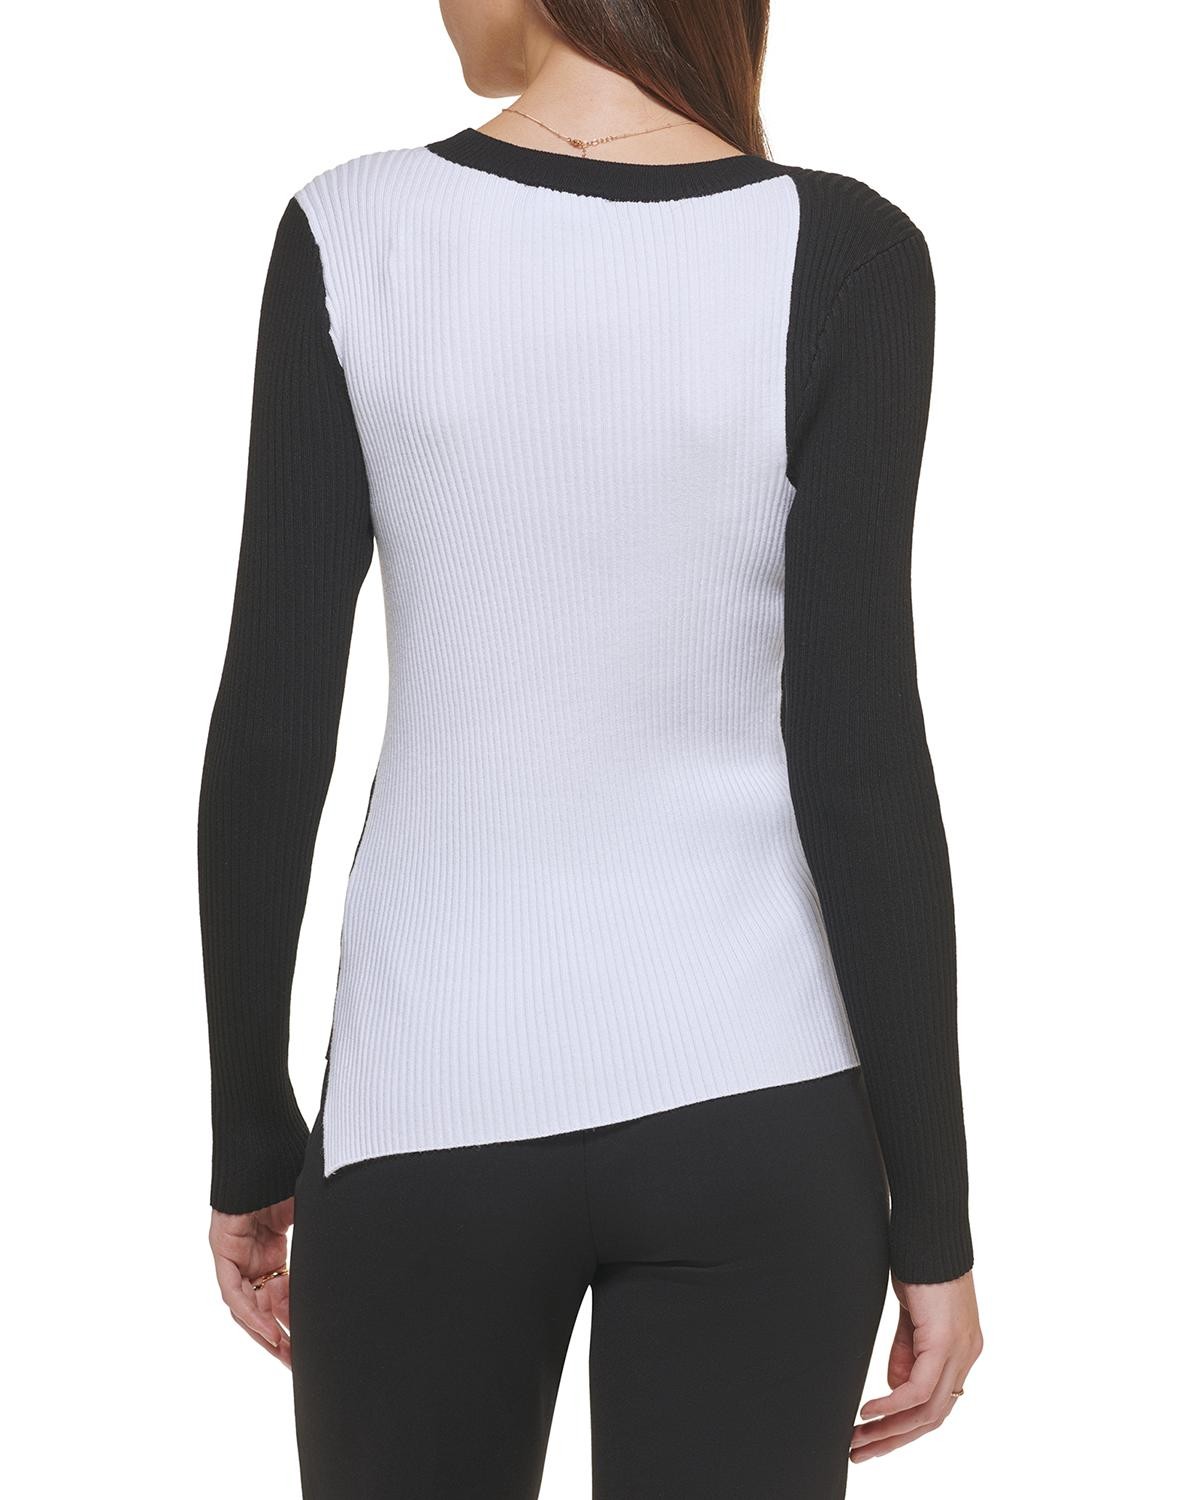 DKNY - Color block crewneck sweater, Black, large image number 3